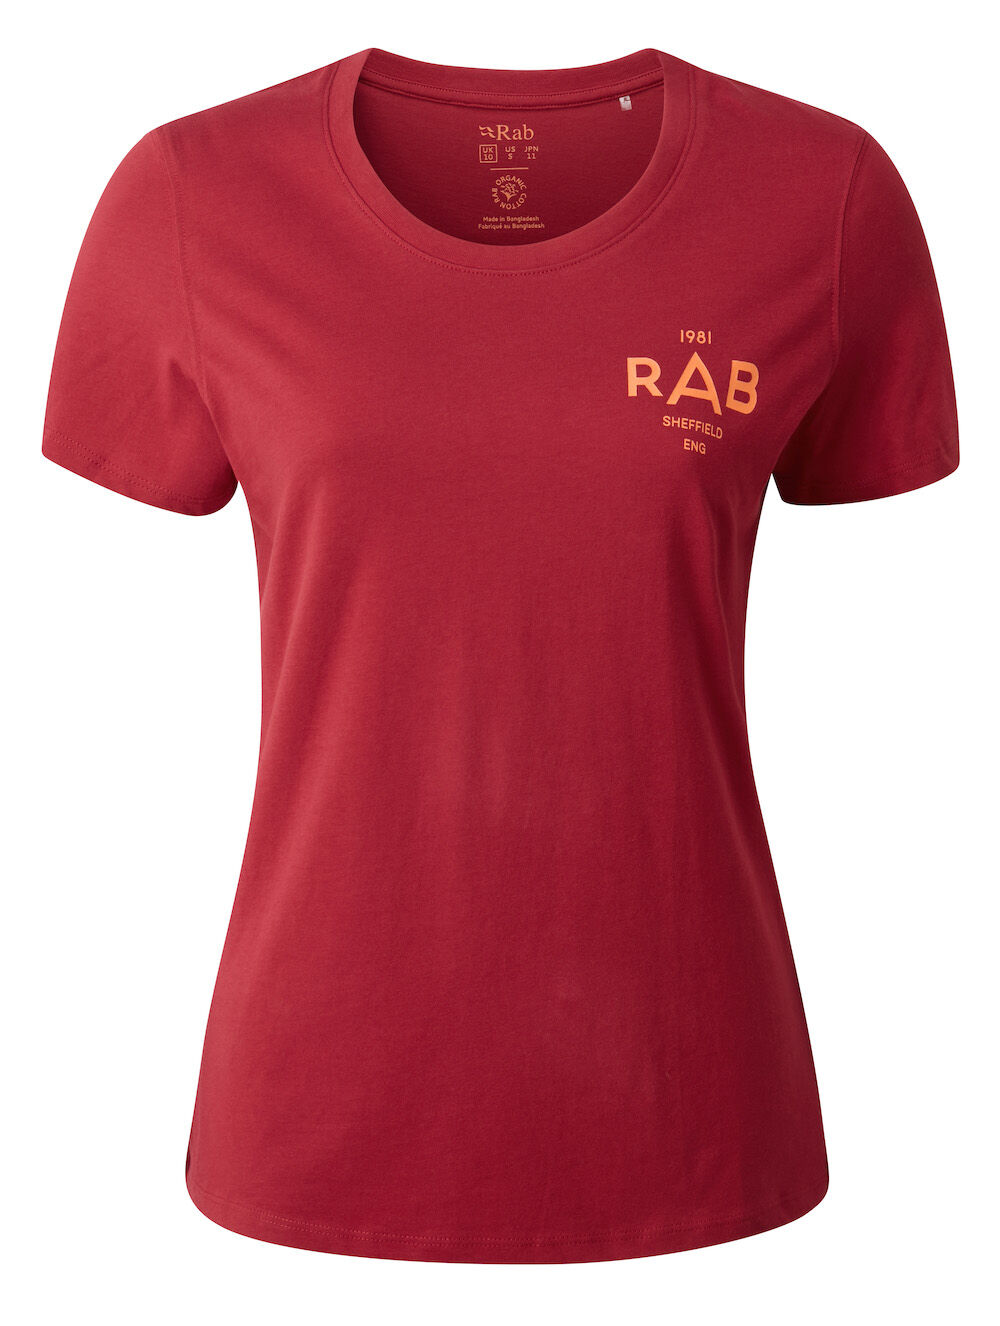 Rab - Stance Geo SS Tee - T-shirt - Donna